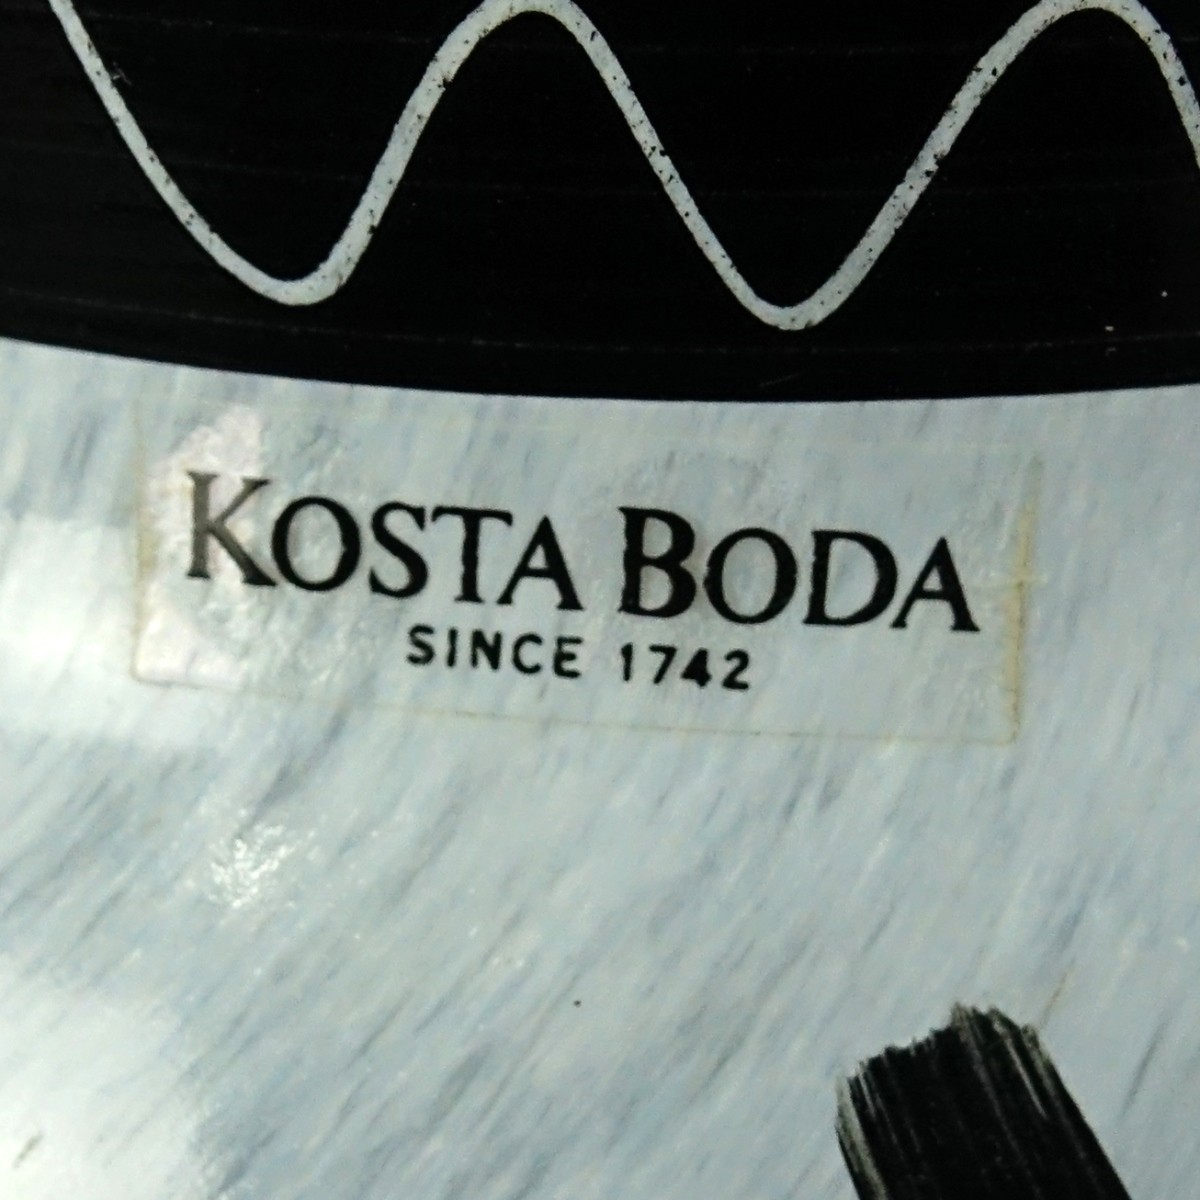 Two (2) Kosta Boda Art Glass Vases